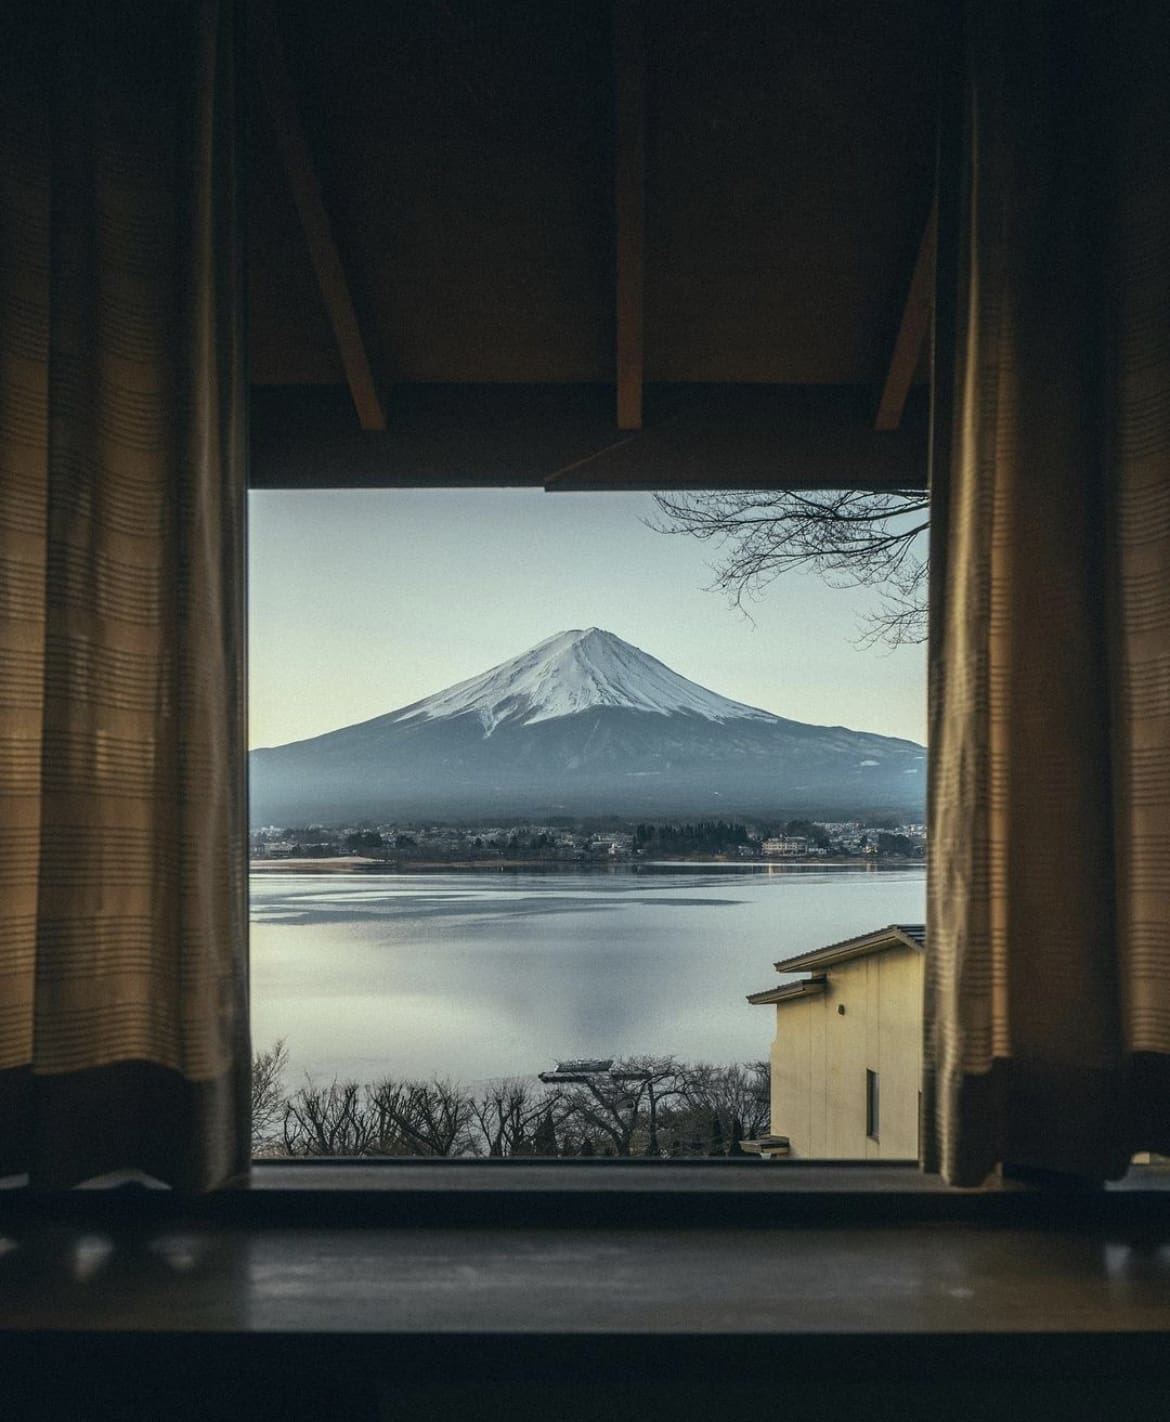 Private views of Mount Fuji